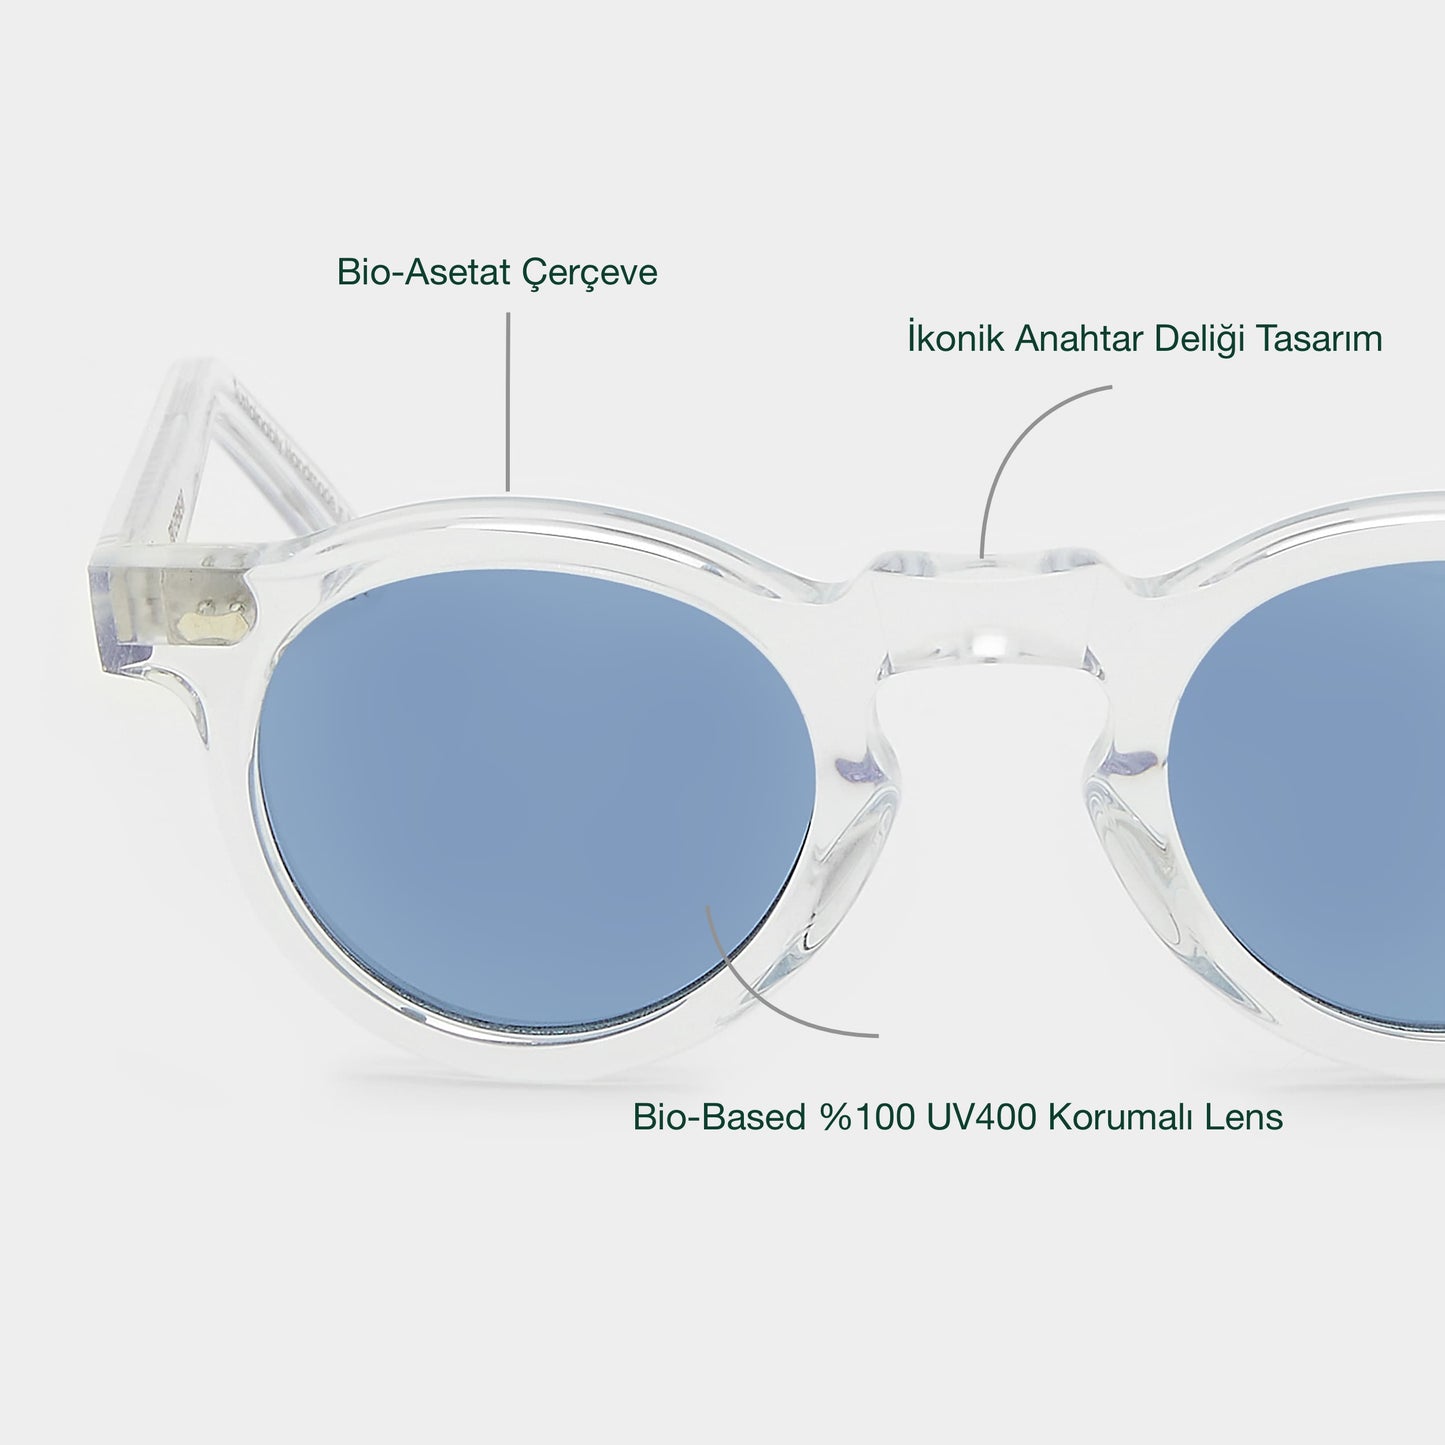 TBD Eyewear Welt Eco Transparent / Blue